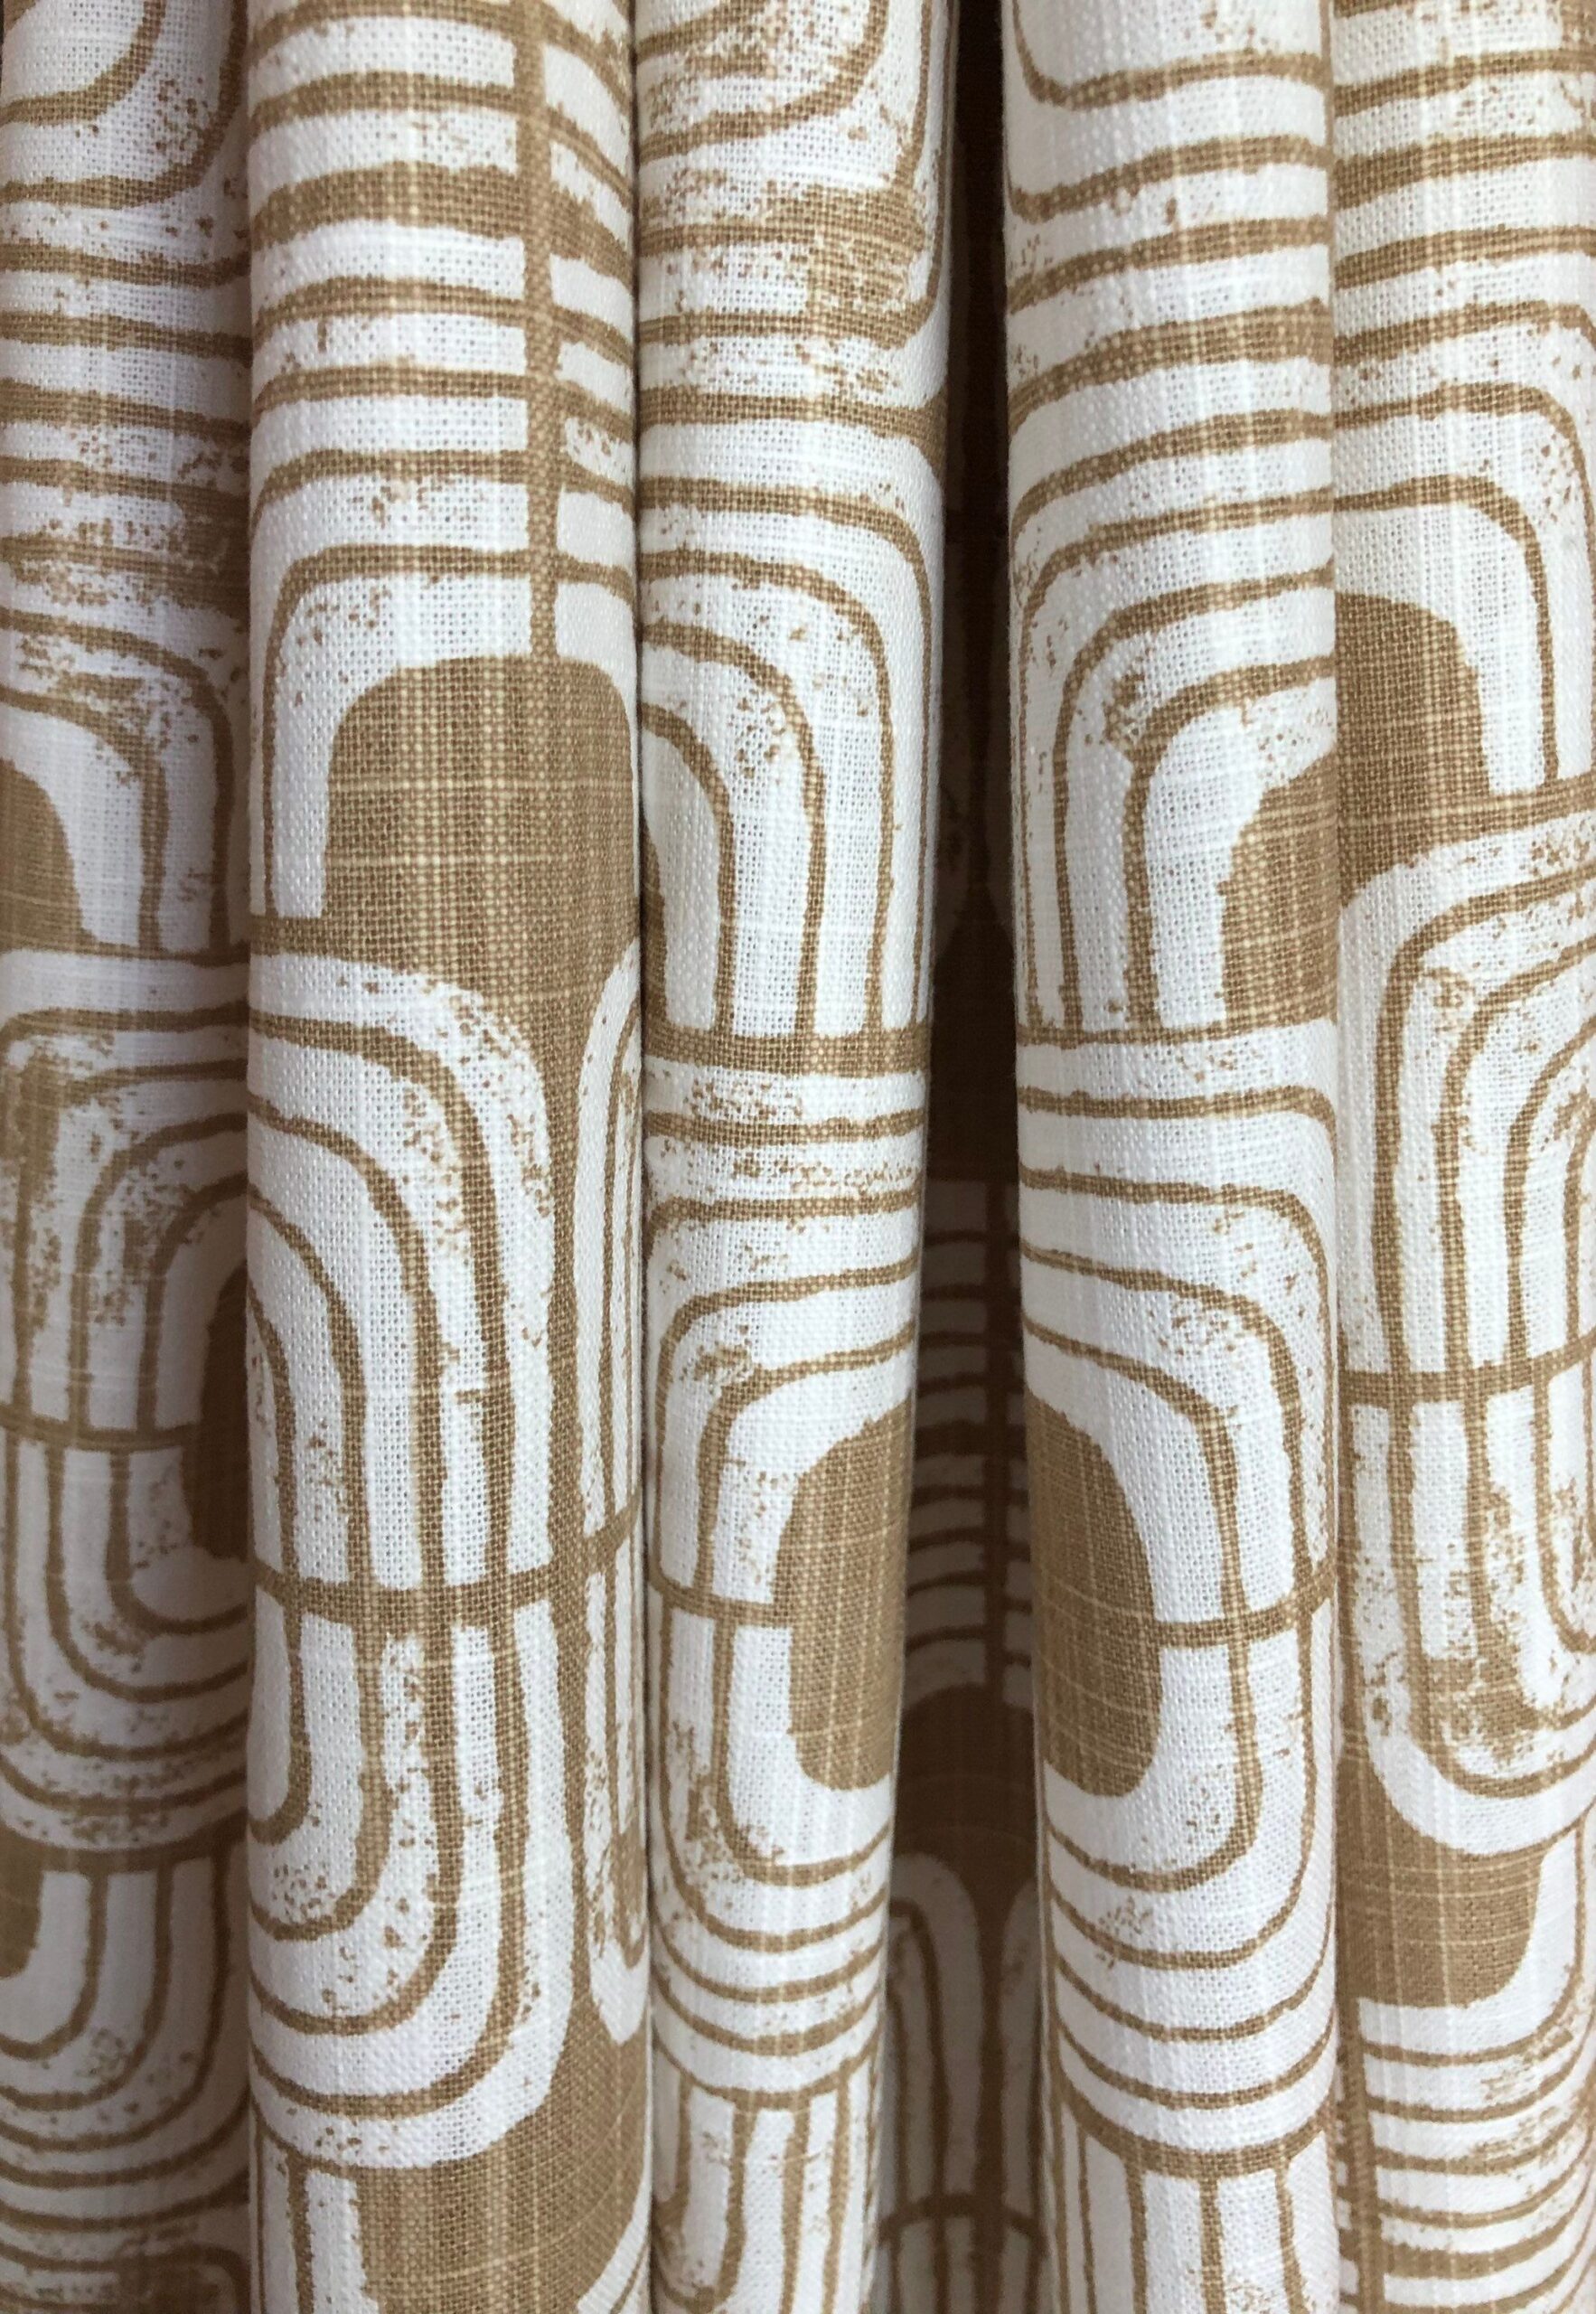 Printed Curtains